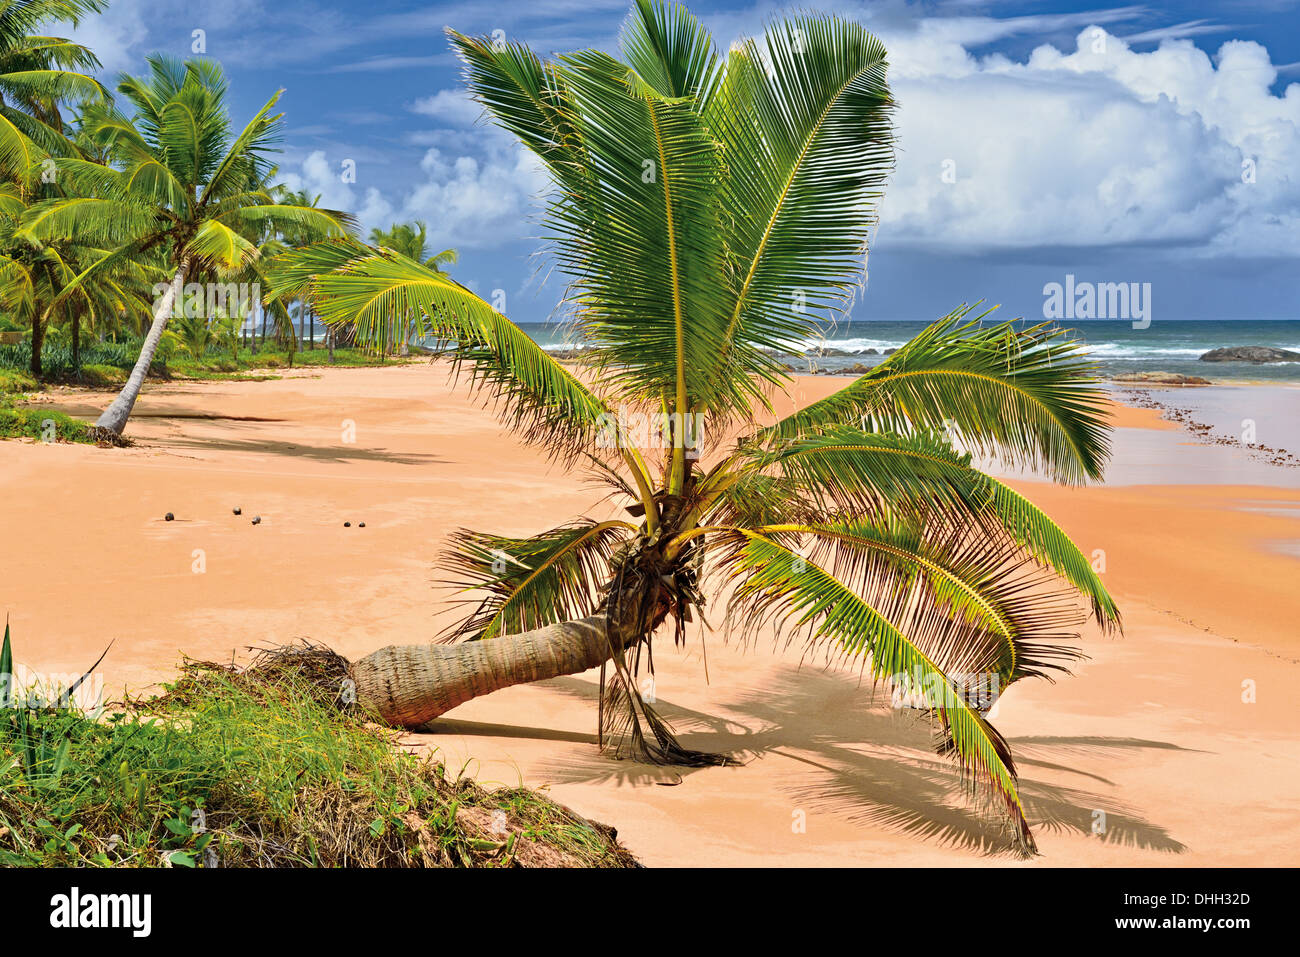 Brazil, Bahia: Fallen palm tree at paradise beach Busca Vida in Camaçarí Stock Photo